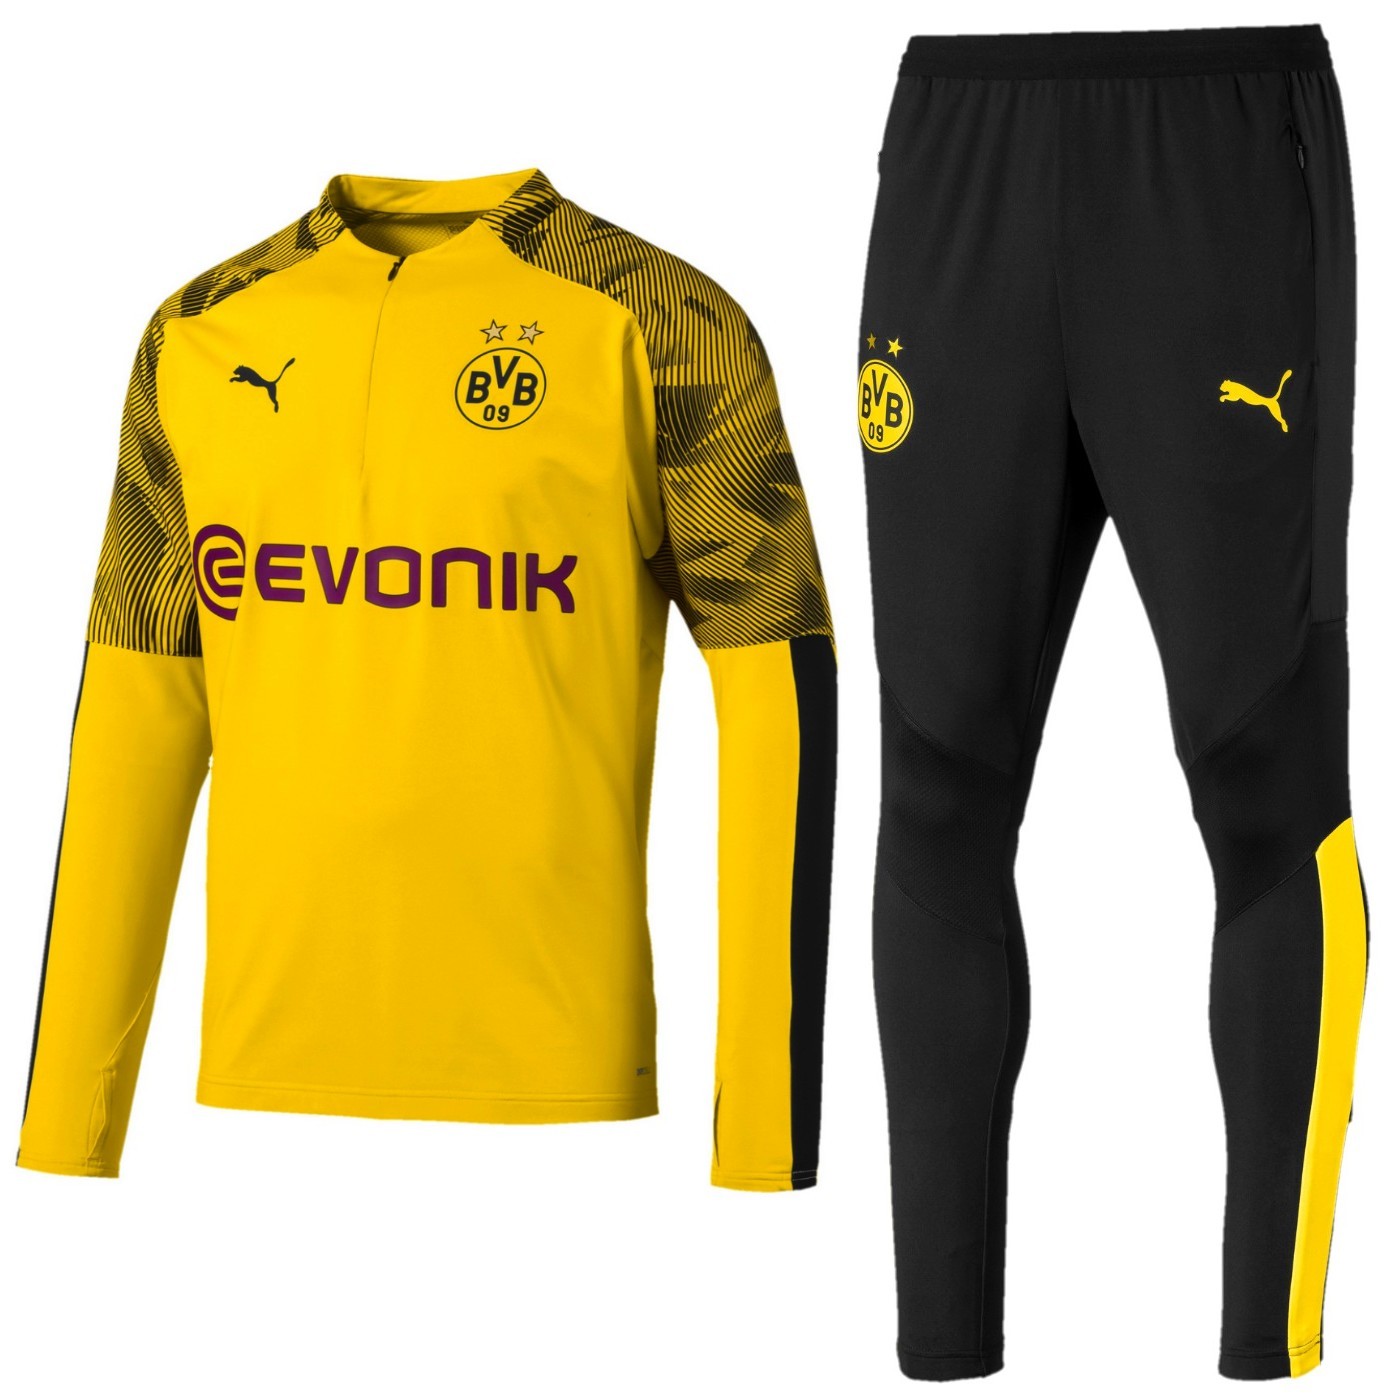 Chandal BVB Borussia Dortmund 2019/20 Puma